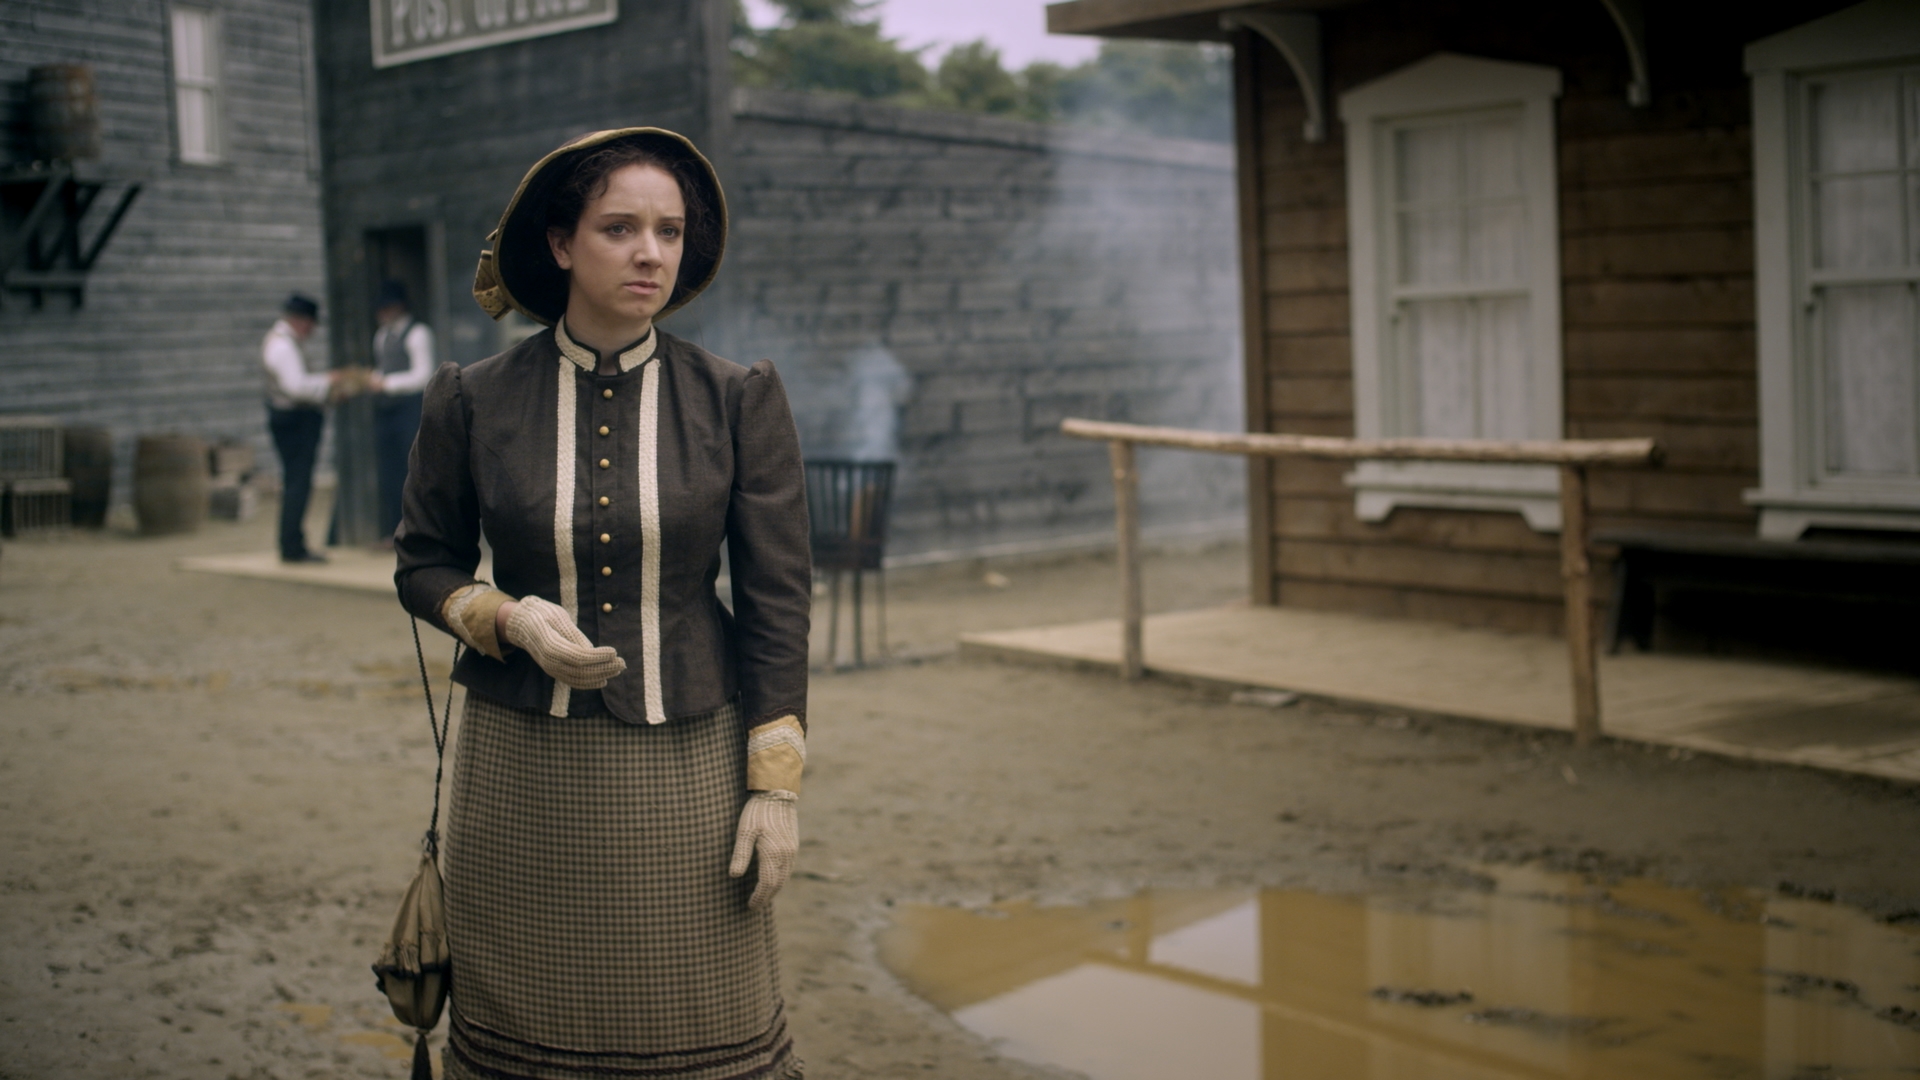 Fionnuala O Flaherty as Bridget Mannion in An Klondike